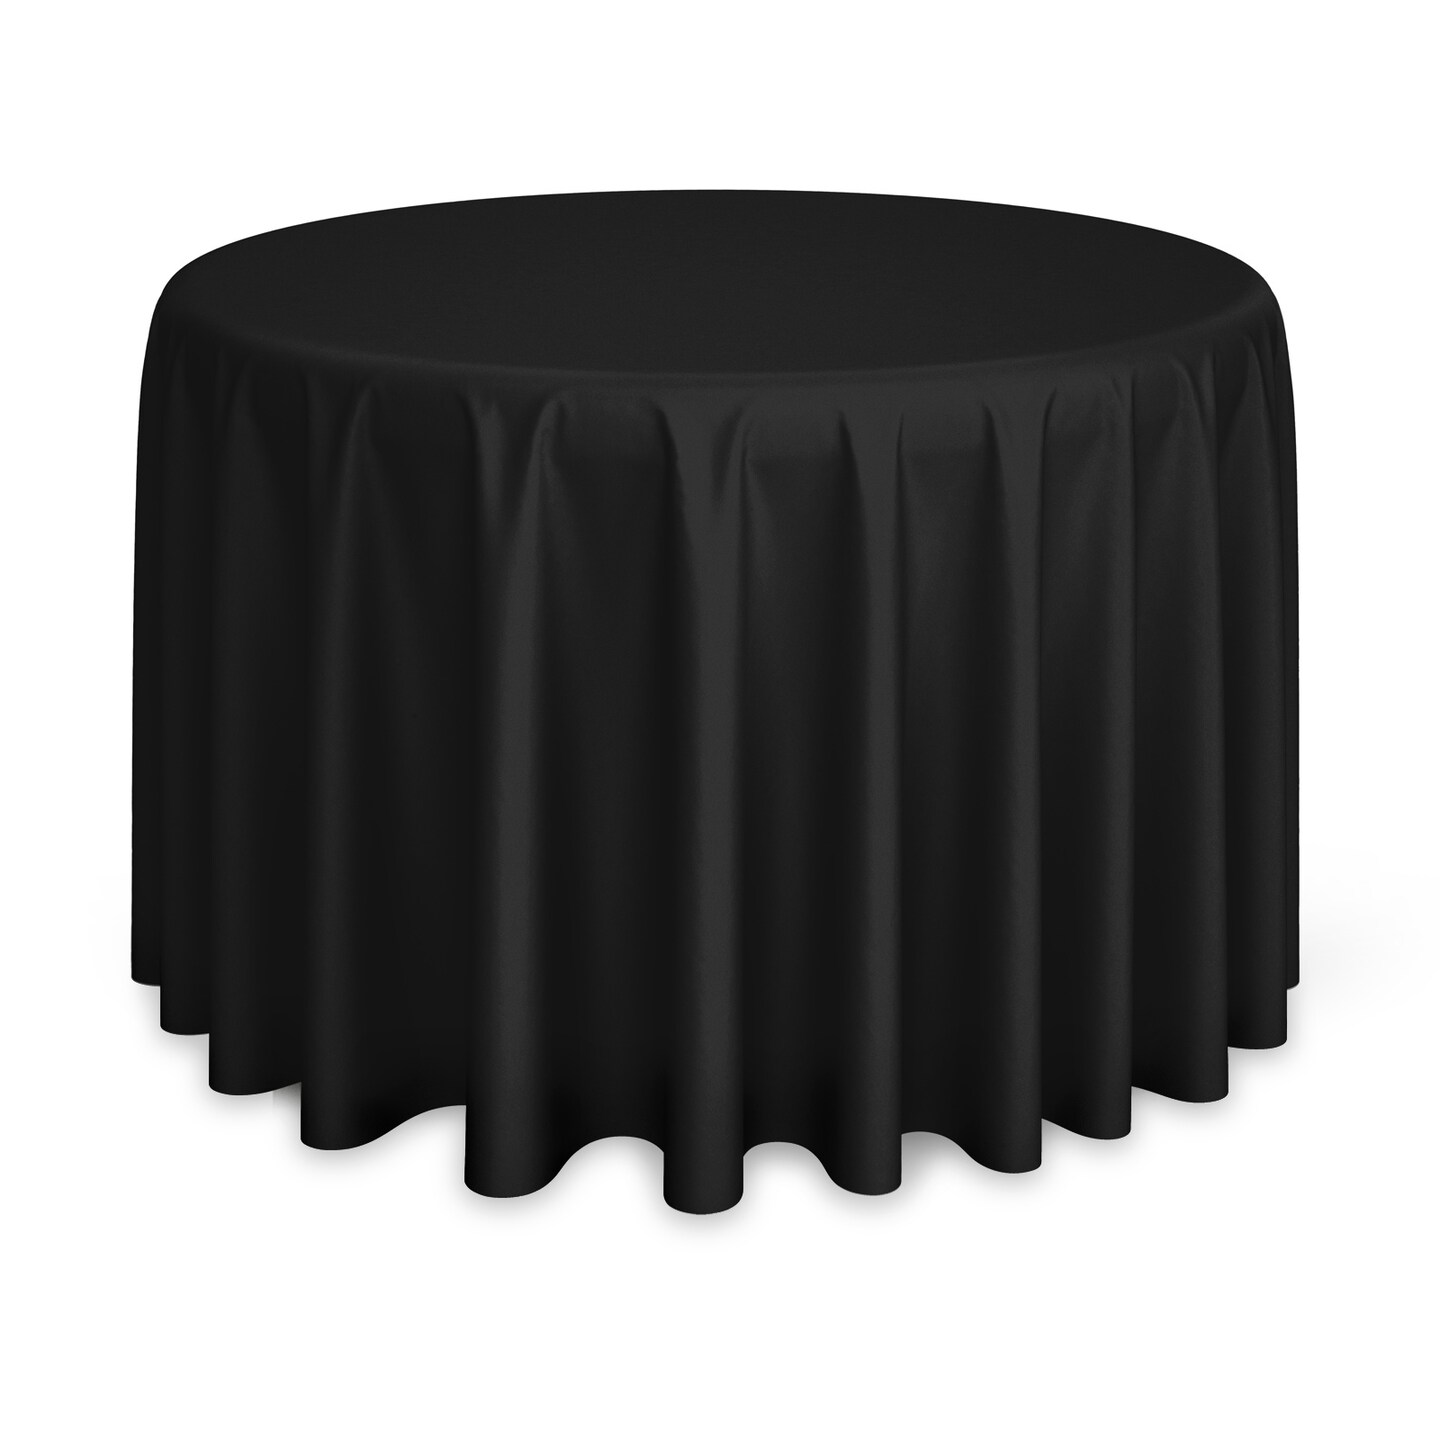 Lann&#x27;s Linens - 20 Premium Round Tablecloths for Wedding / Banquet / Restaurant - Polyester Fabric Table Cloths